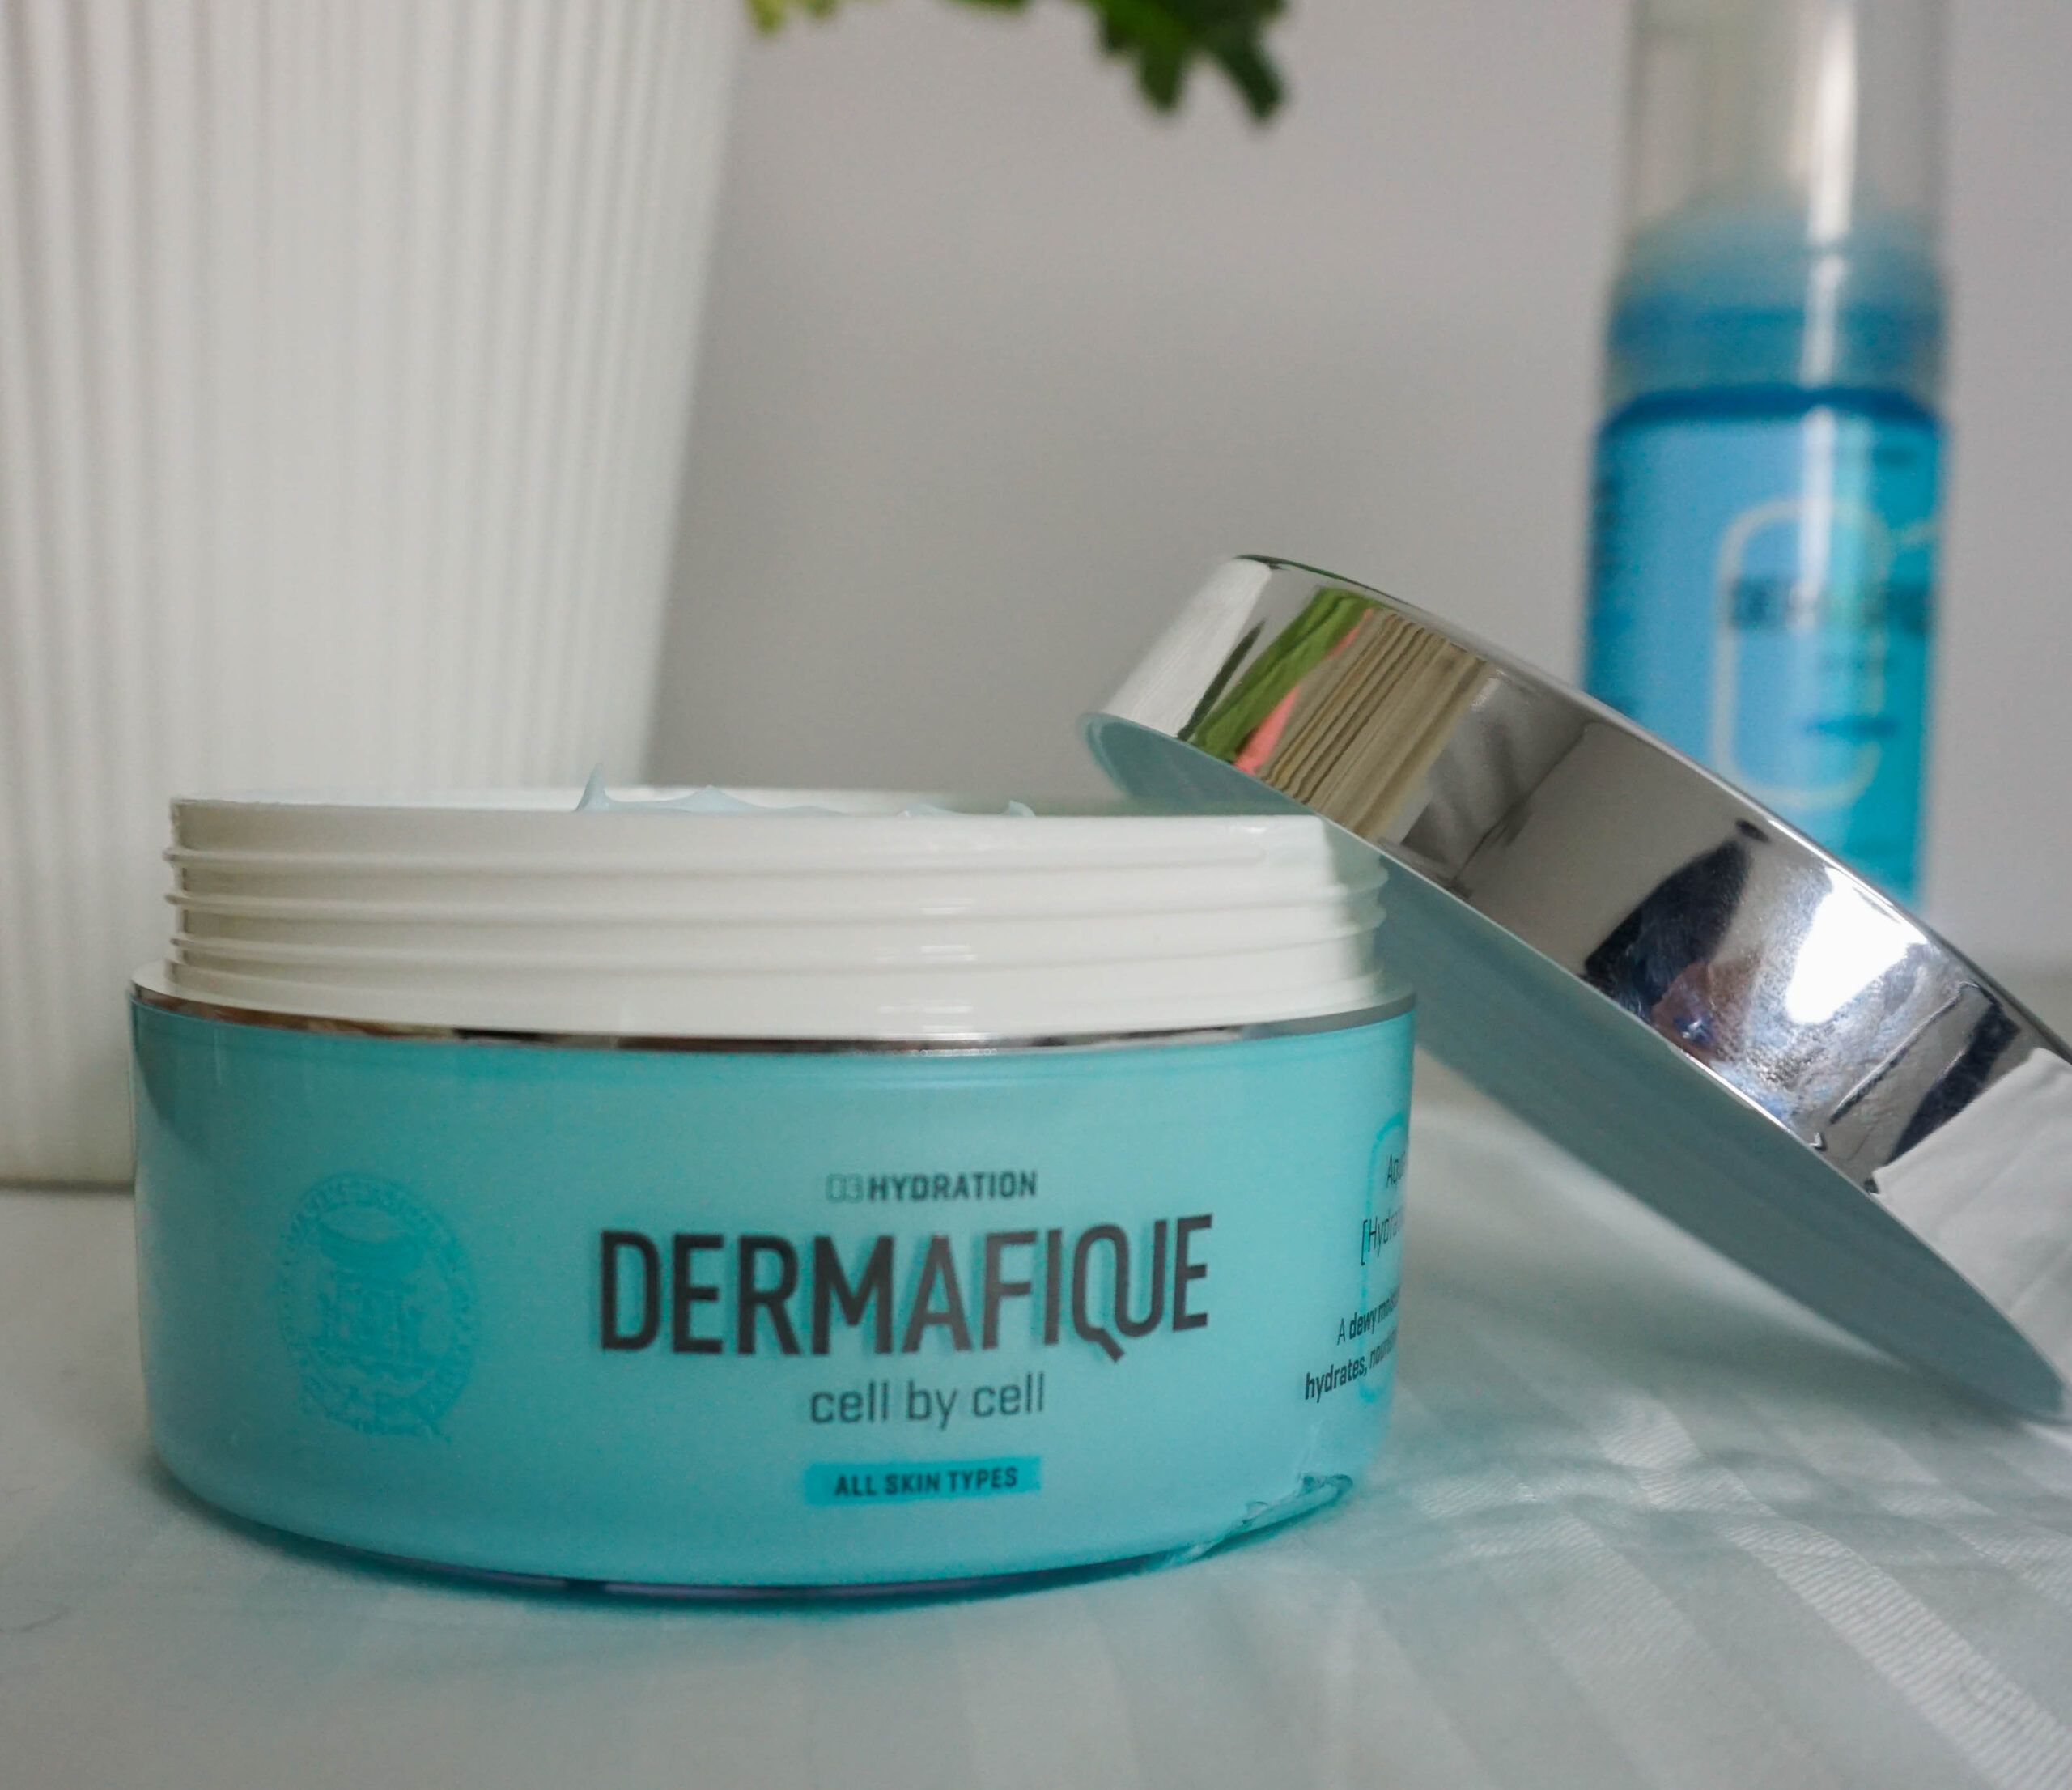 Dermafique’s New Skincare Range Made Me Reconsider My Skincare Routine